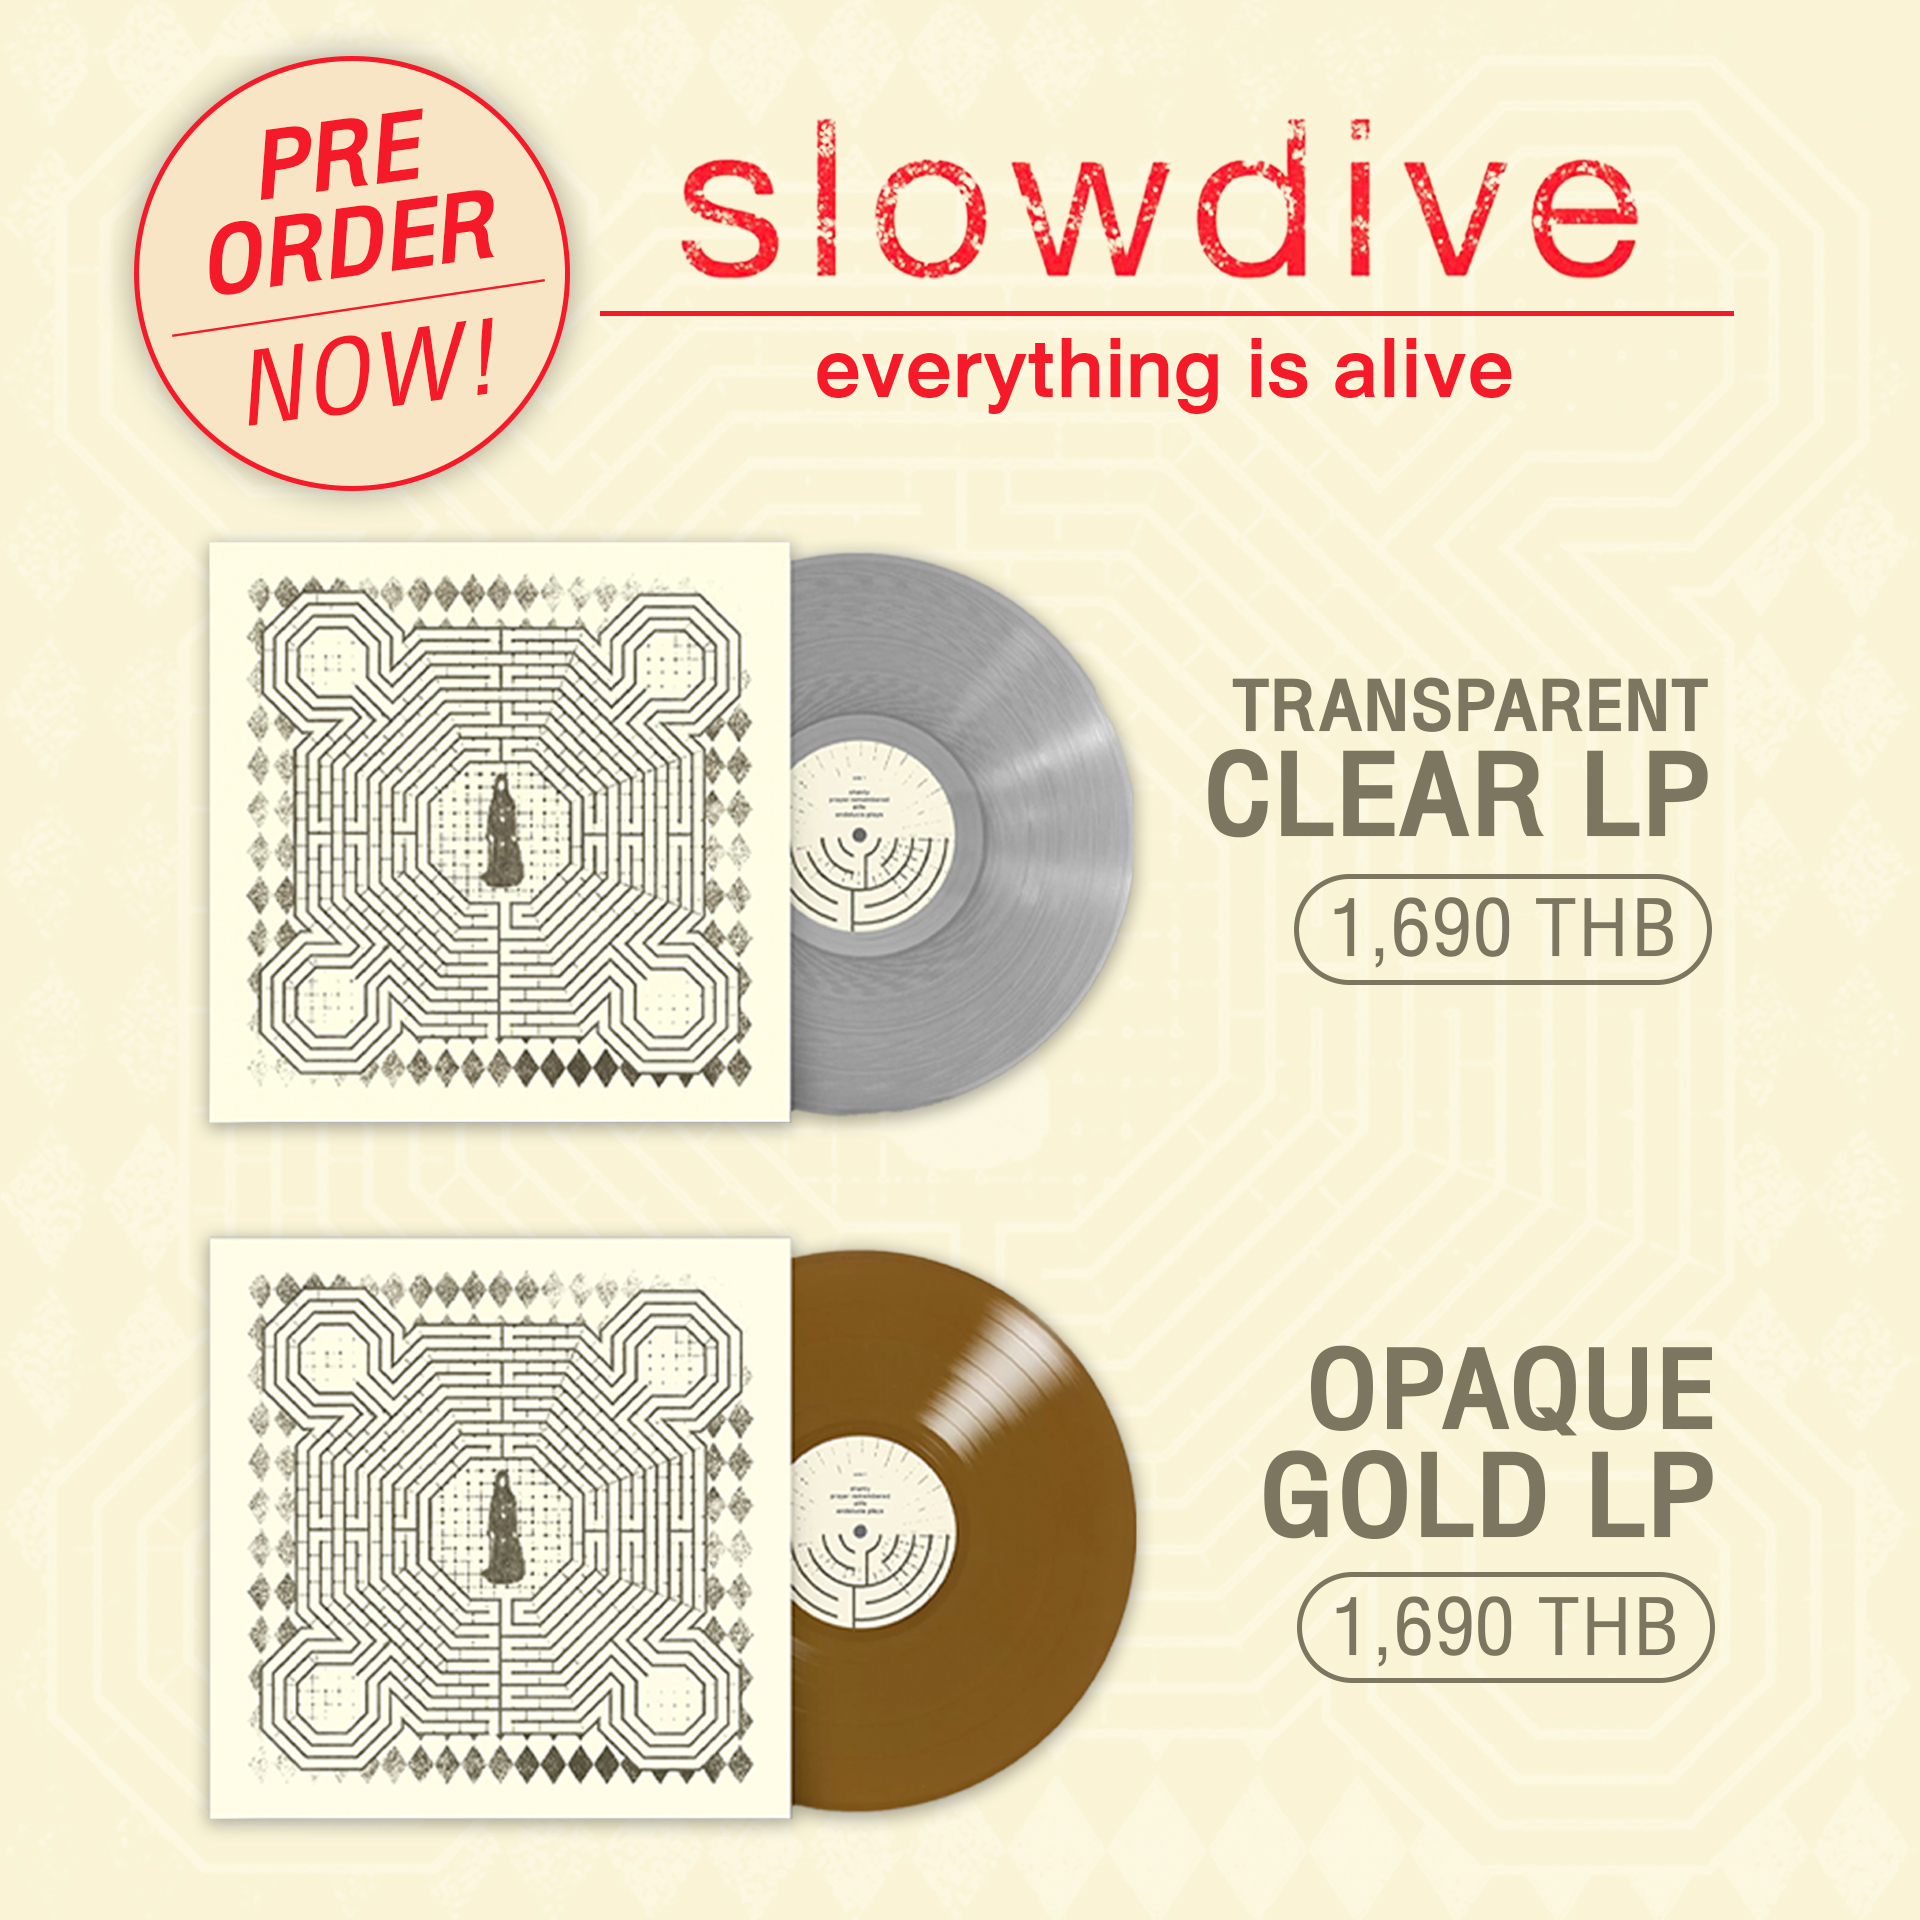 Slowdive Exclusive LP Color Vinyl